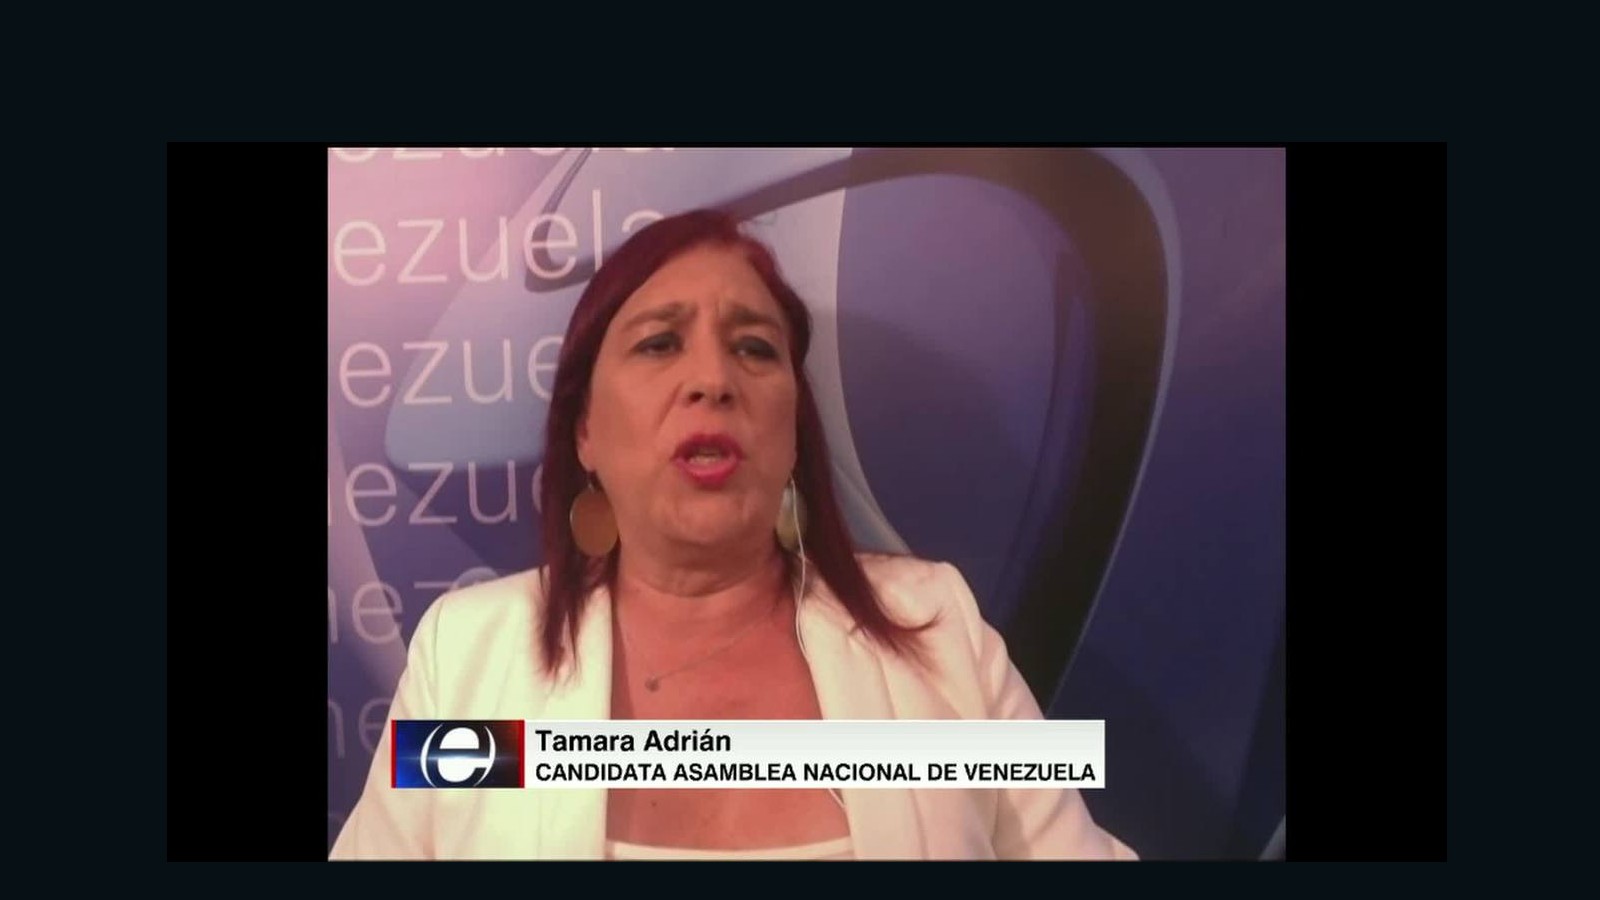 Tamara Adrián, la candidata trans en Venezuela - CNN Video